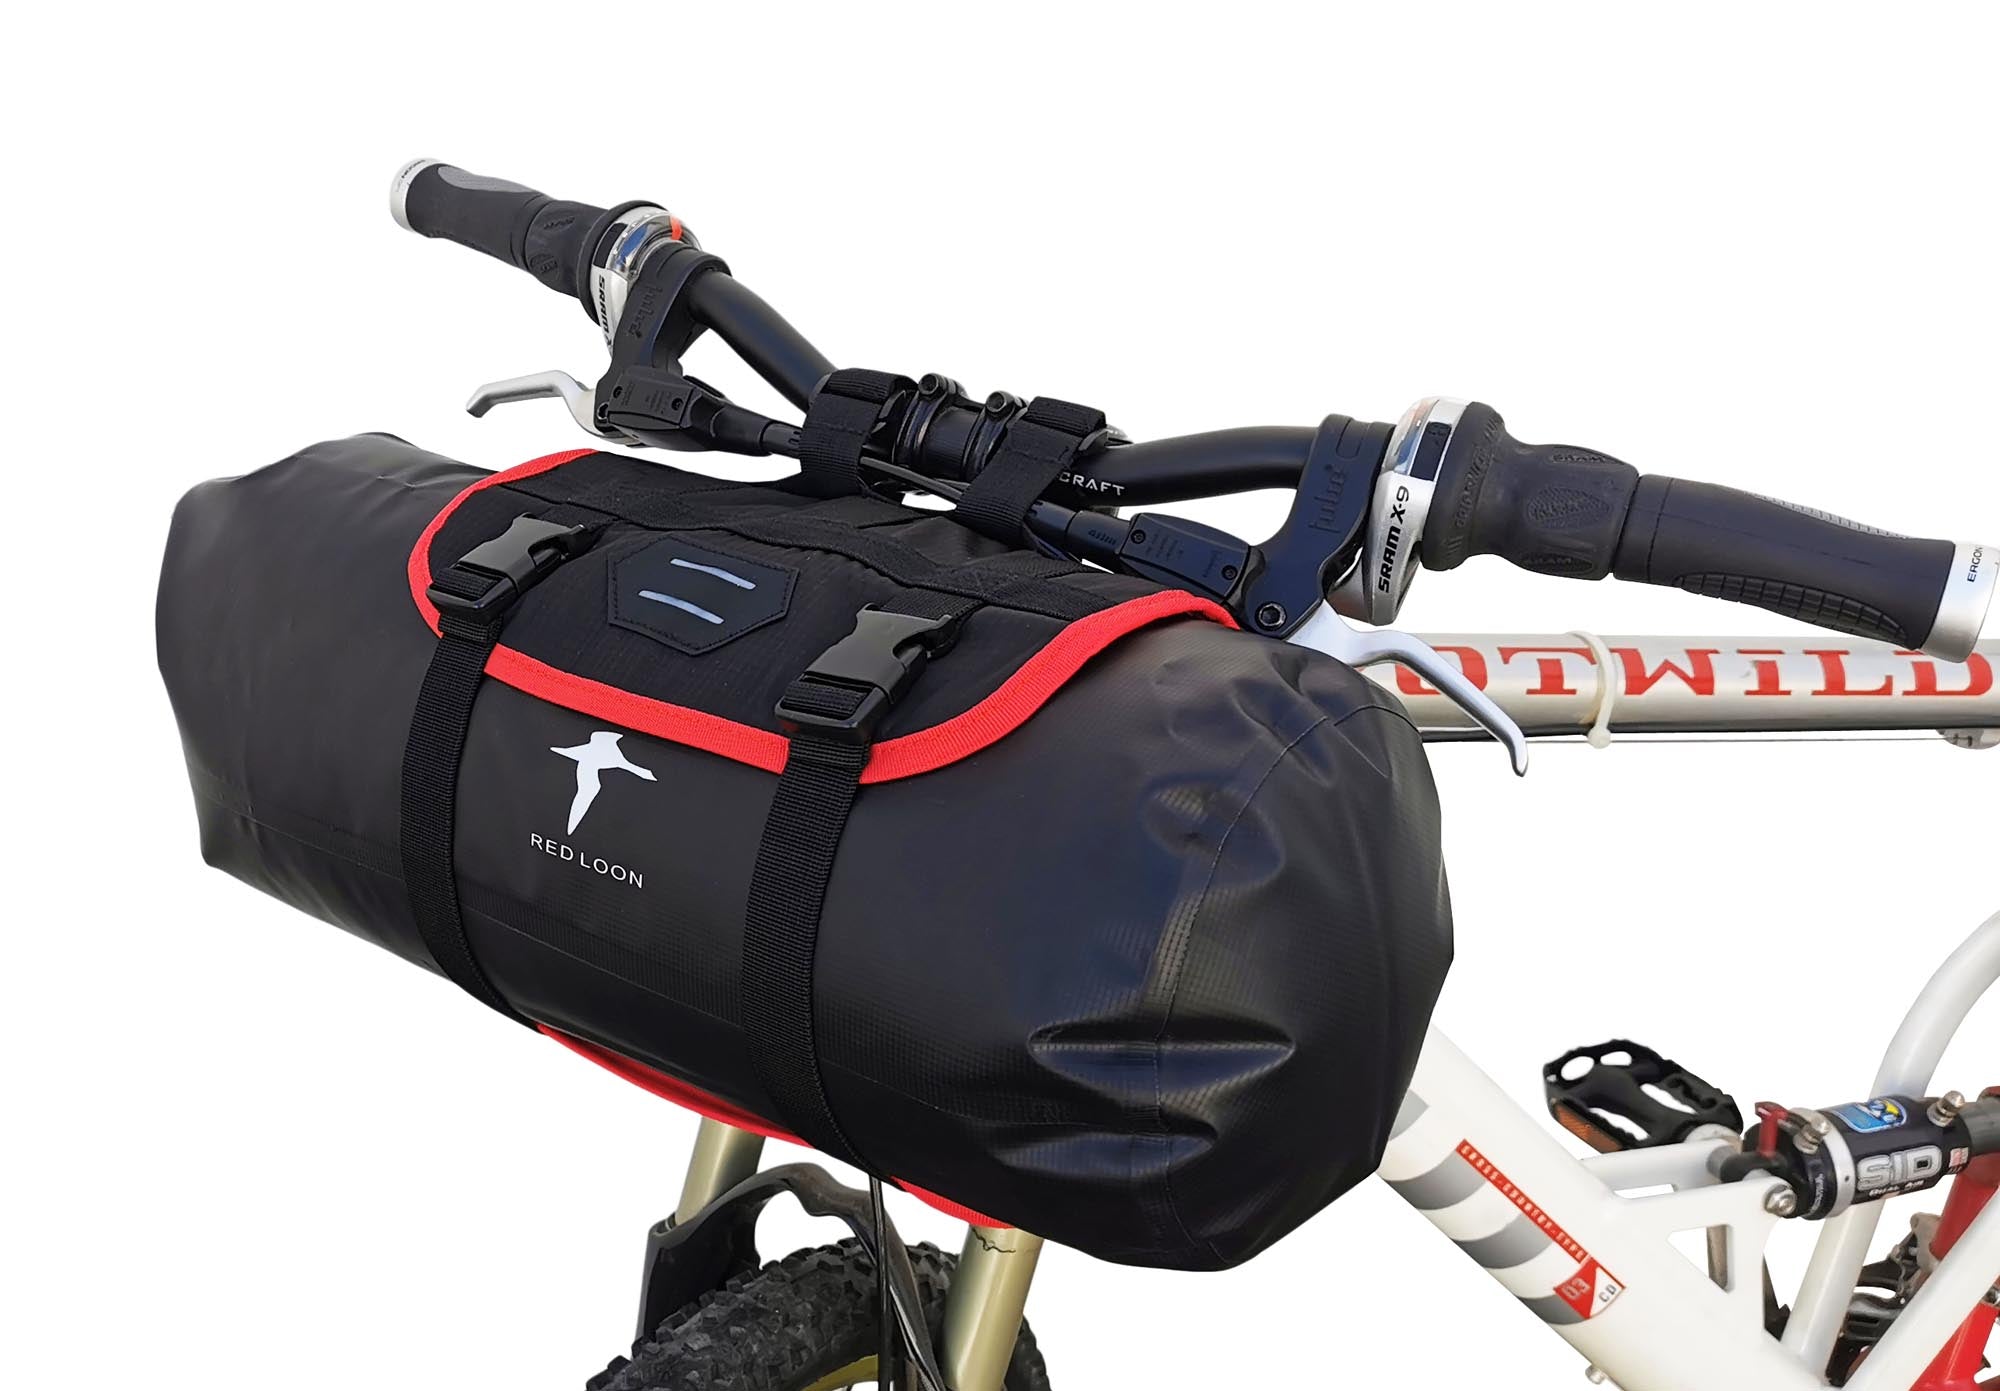 Red Loon Lenkertasche 10 Liter Fahrradtasche Pannier wasserdicht Packtasche Dry Bag